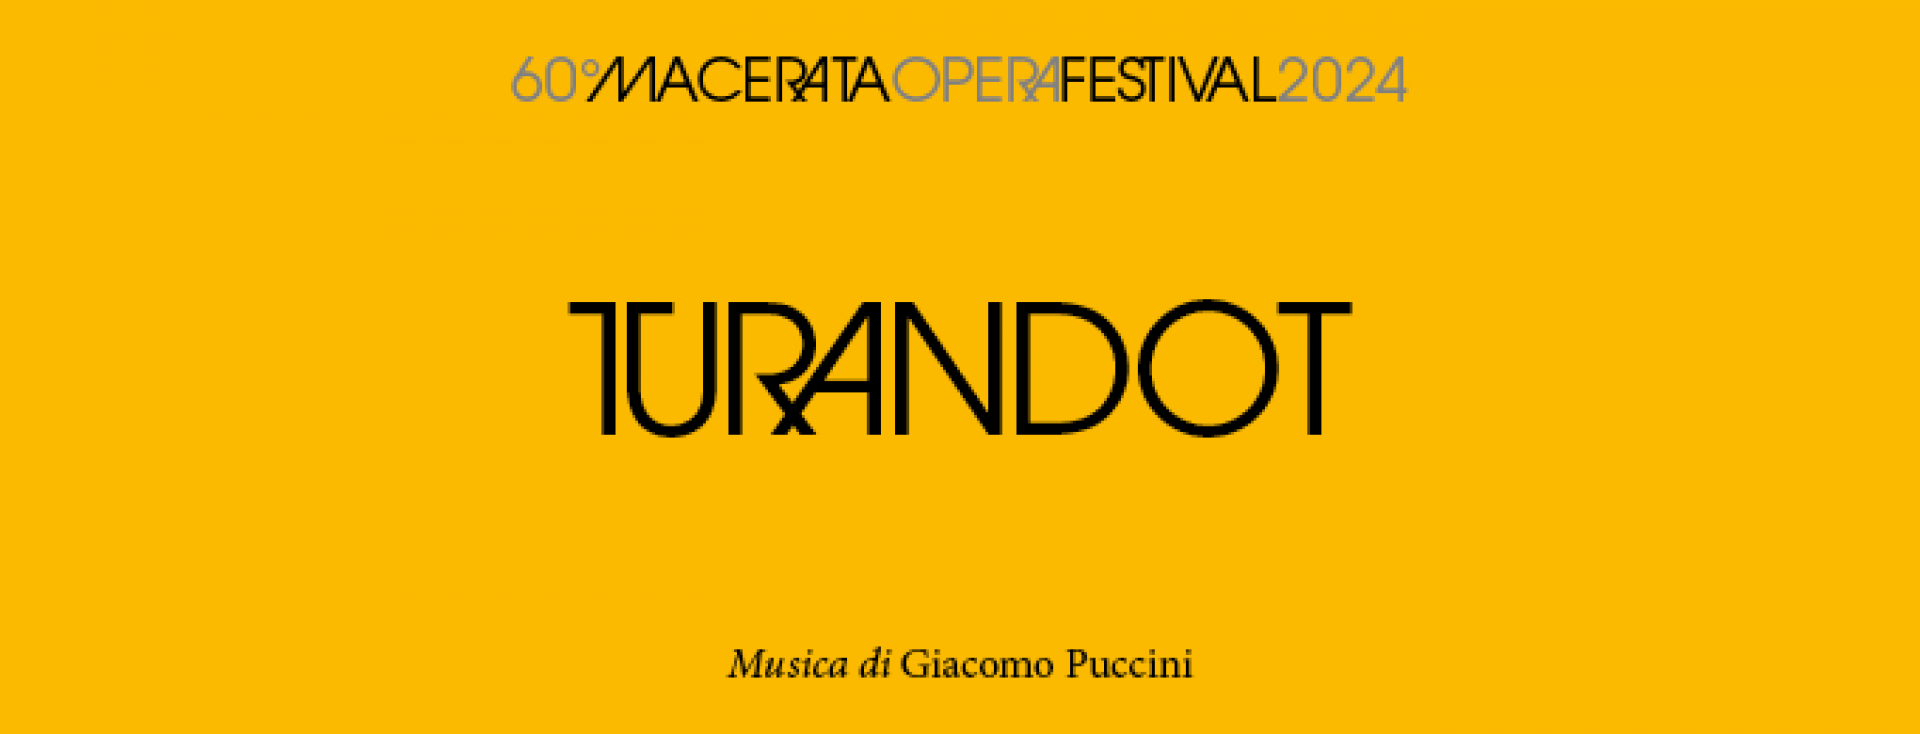 Turandot -Macerata Opera Festival 2024